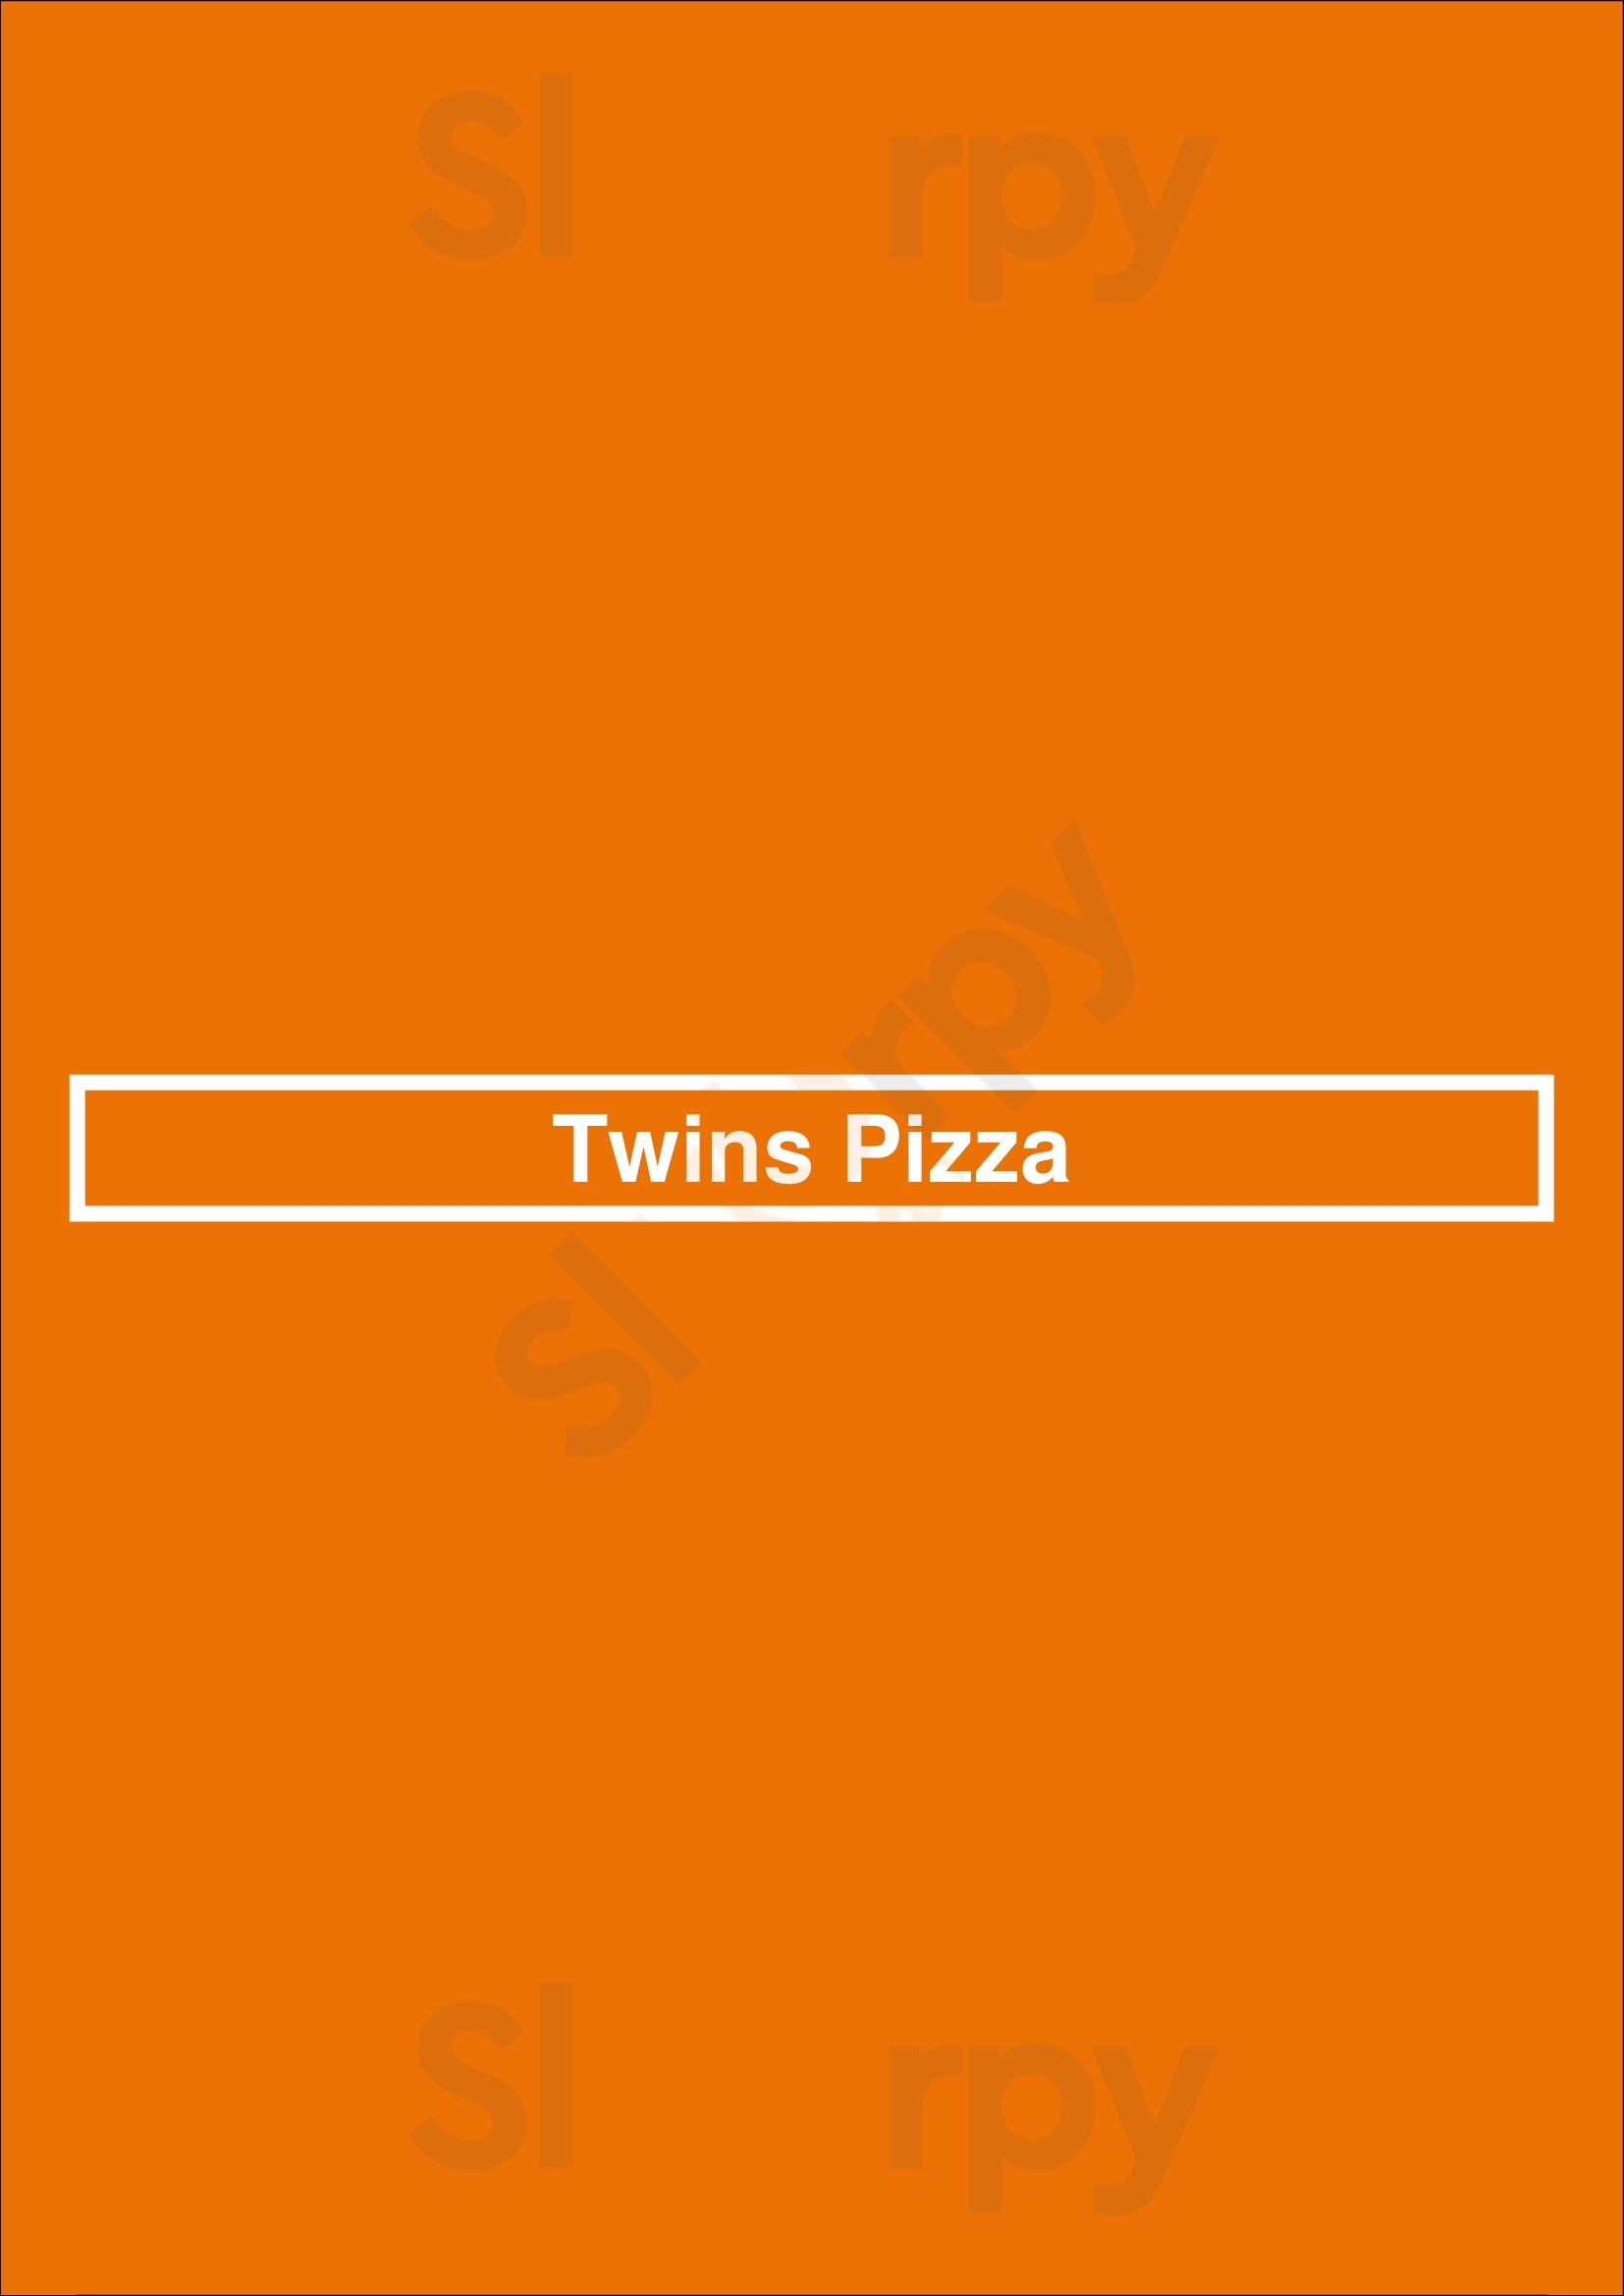 Twins Pizza Manchester Menu - 1